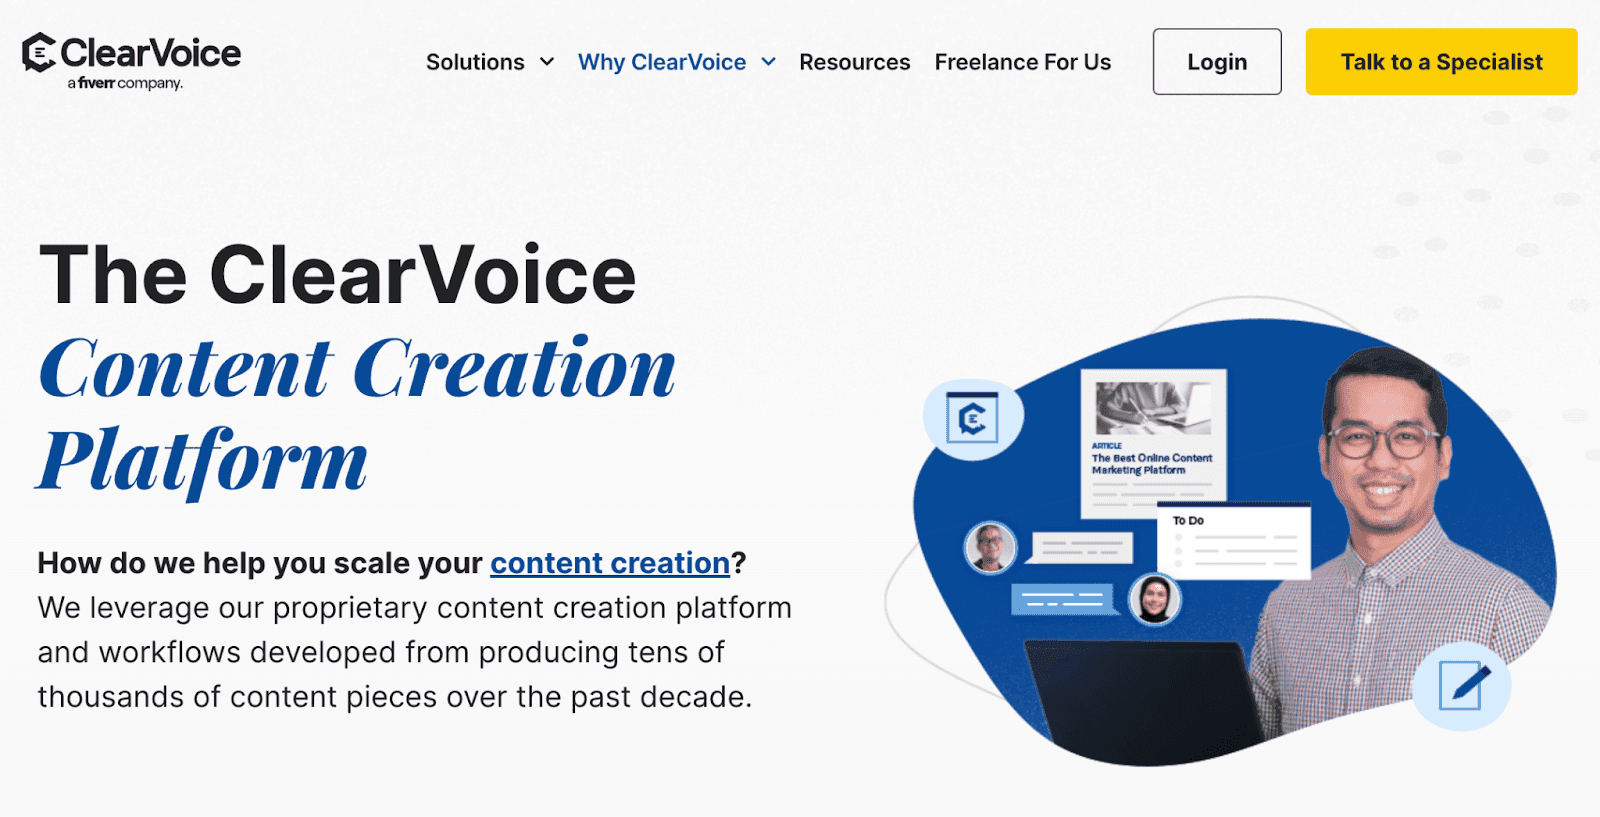 The ClearVoice Content Creation Platform